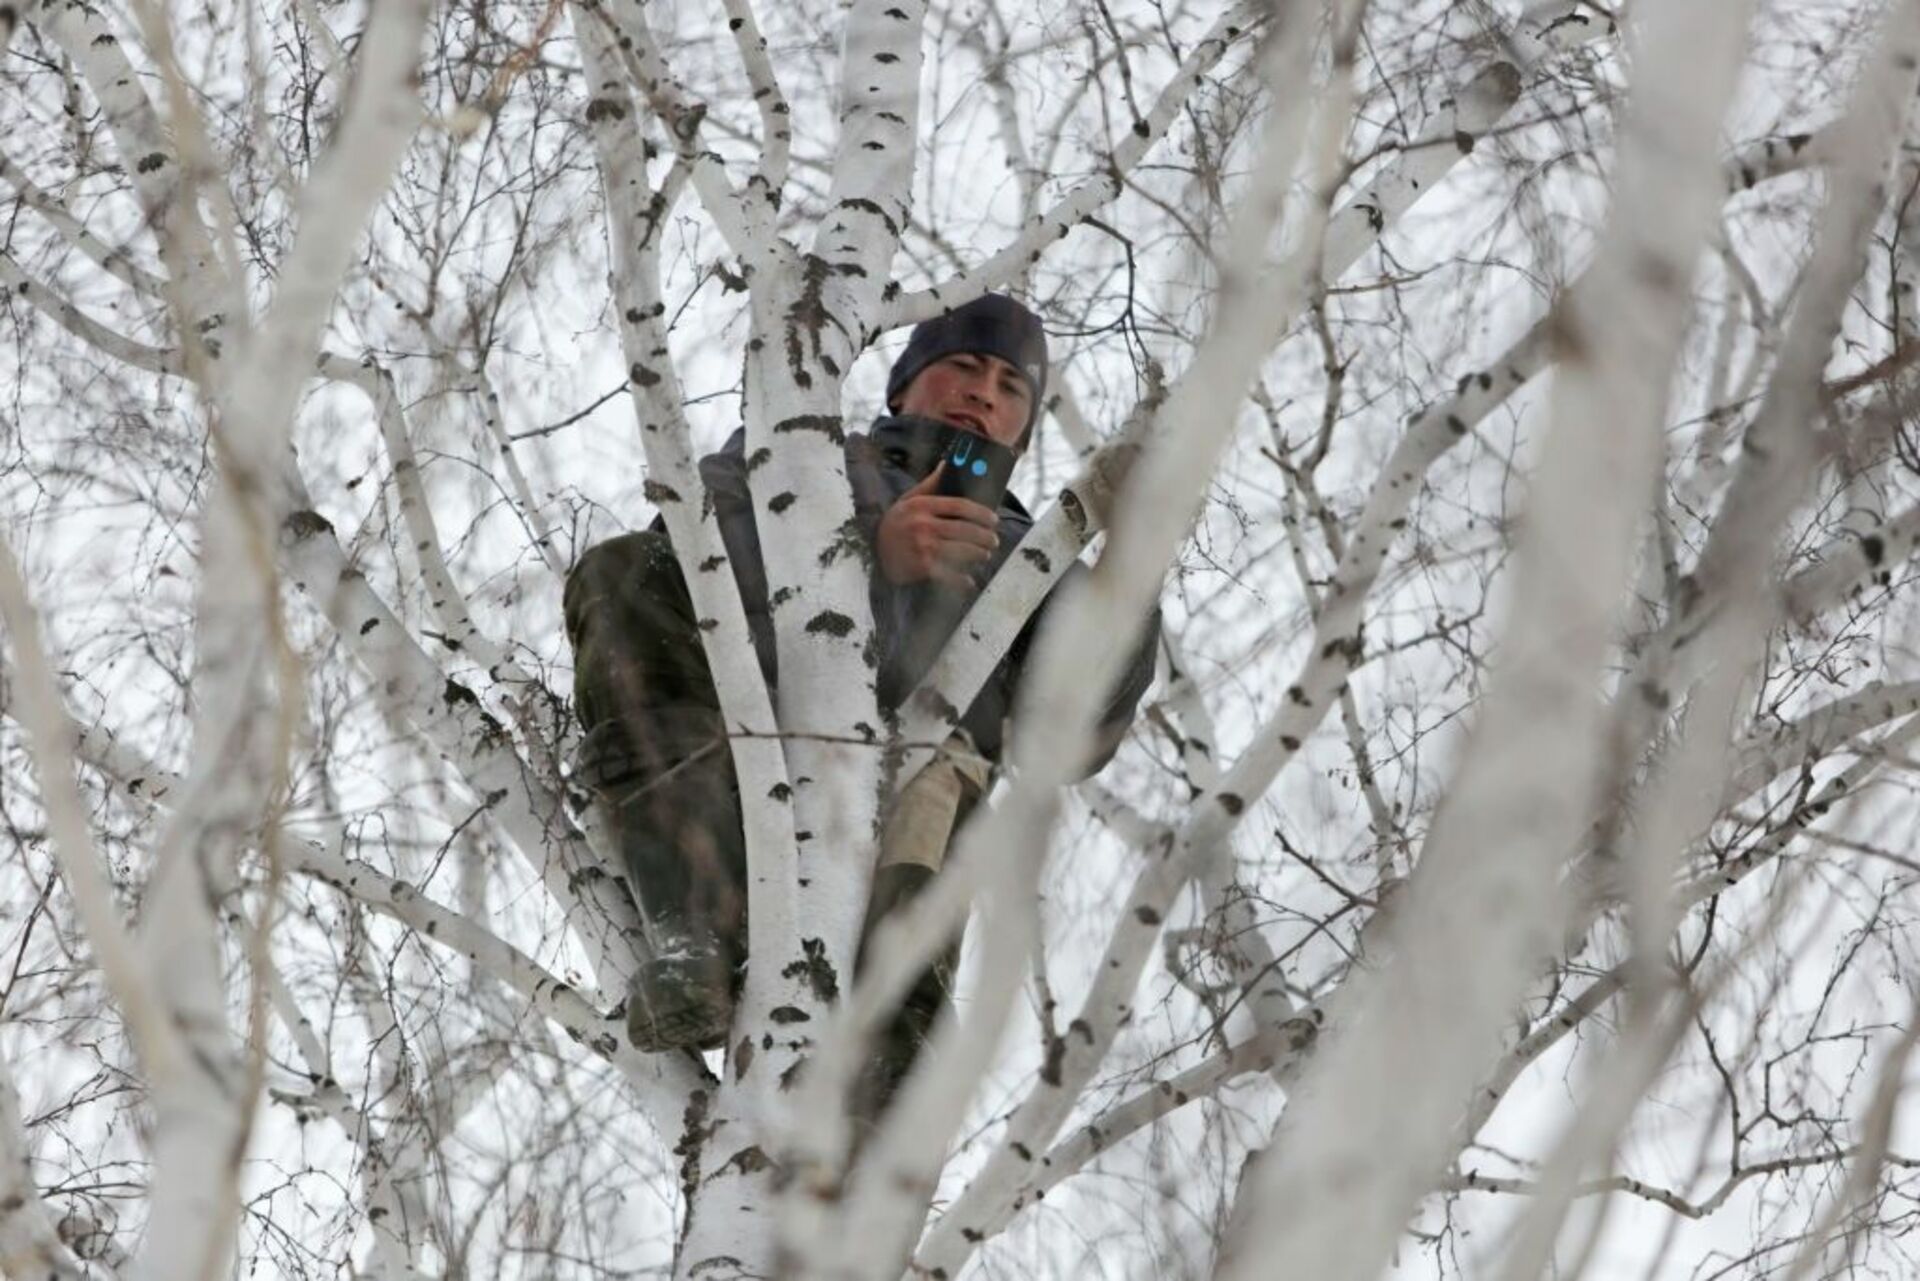 Висит на березки. Береза и человек. Ловлю интернет на дереве.